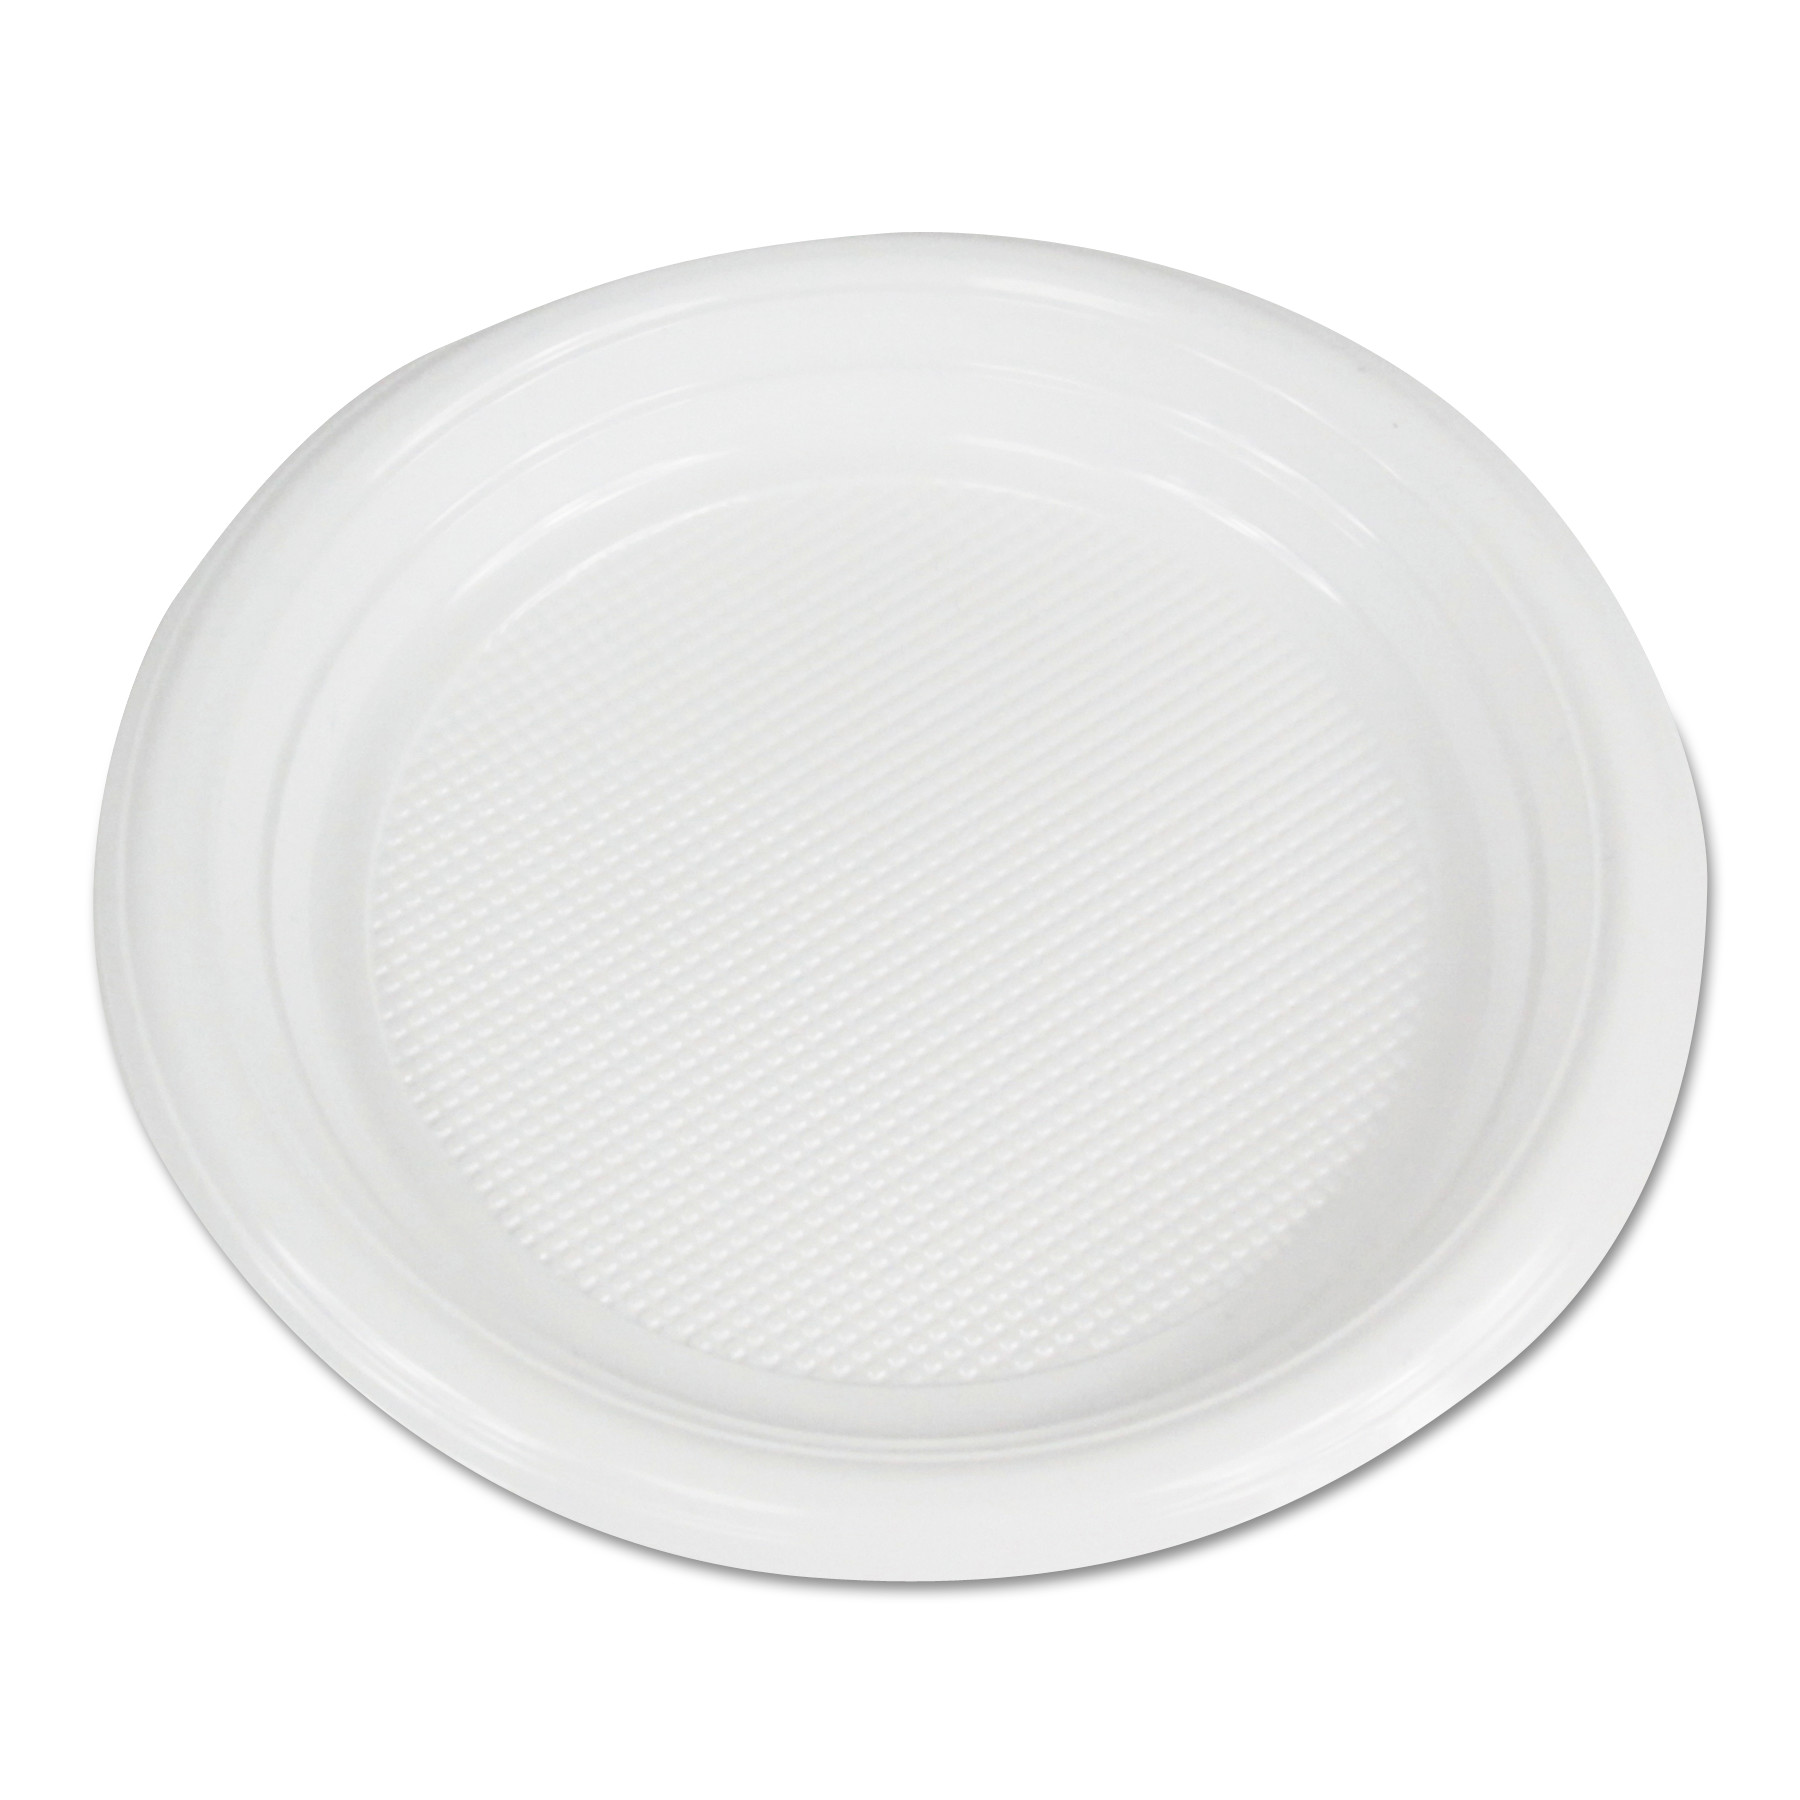 Hi-Impact Plastic Dinnerware, Plate, 6" Diameter, White, 1000/Carton